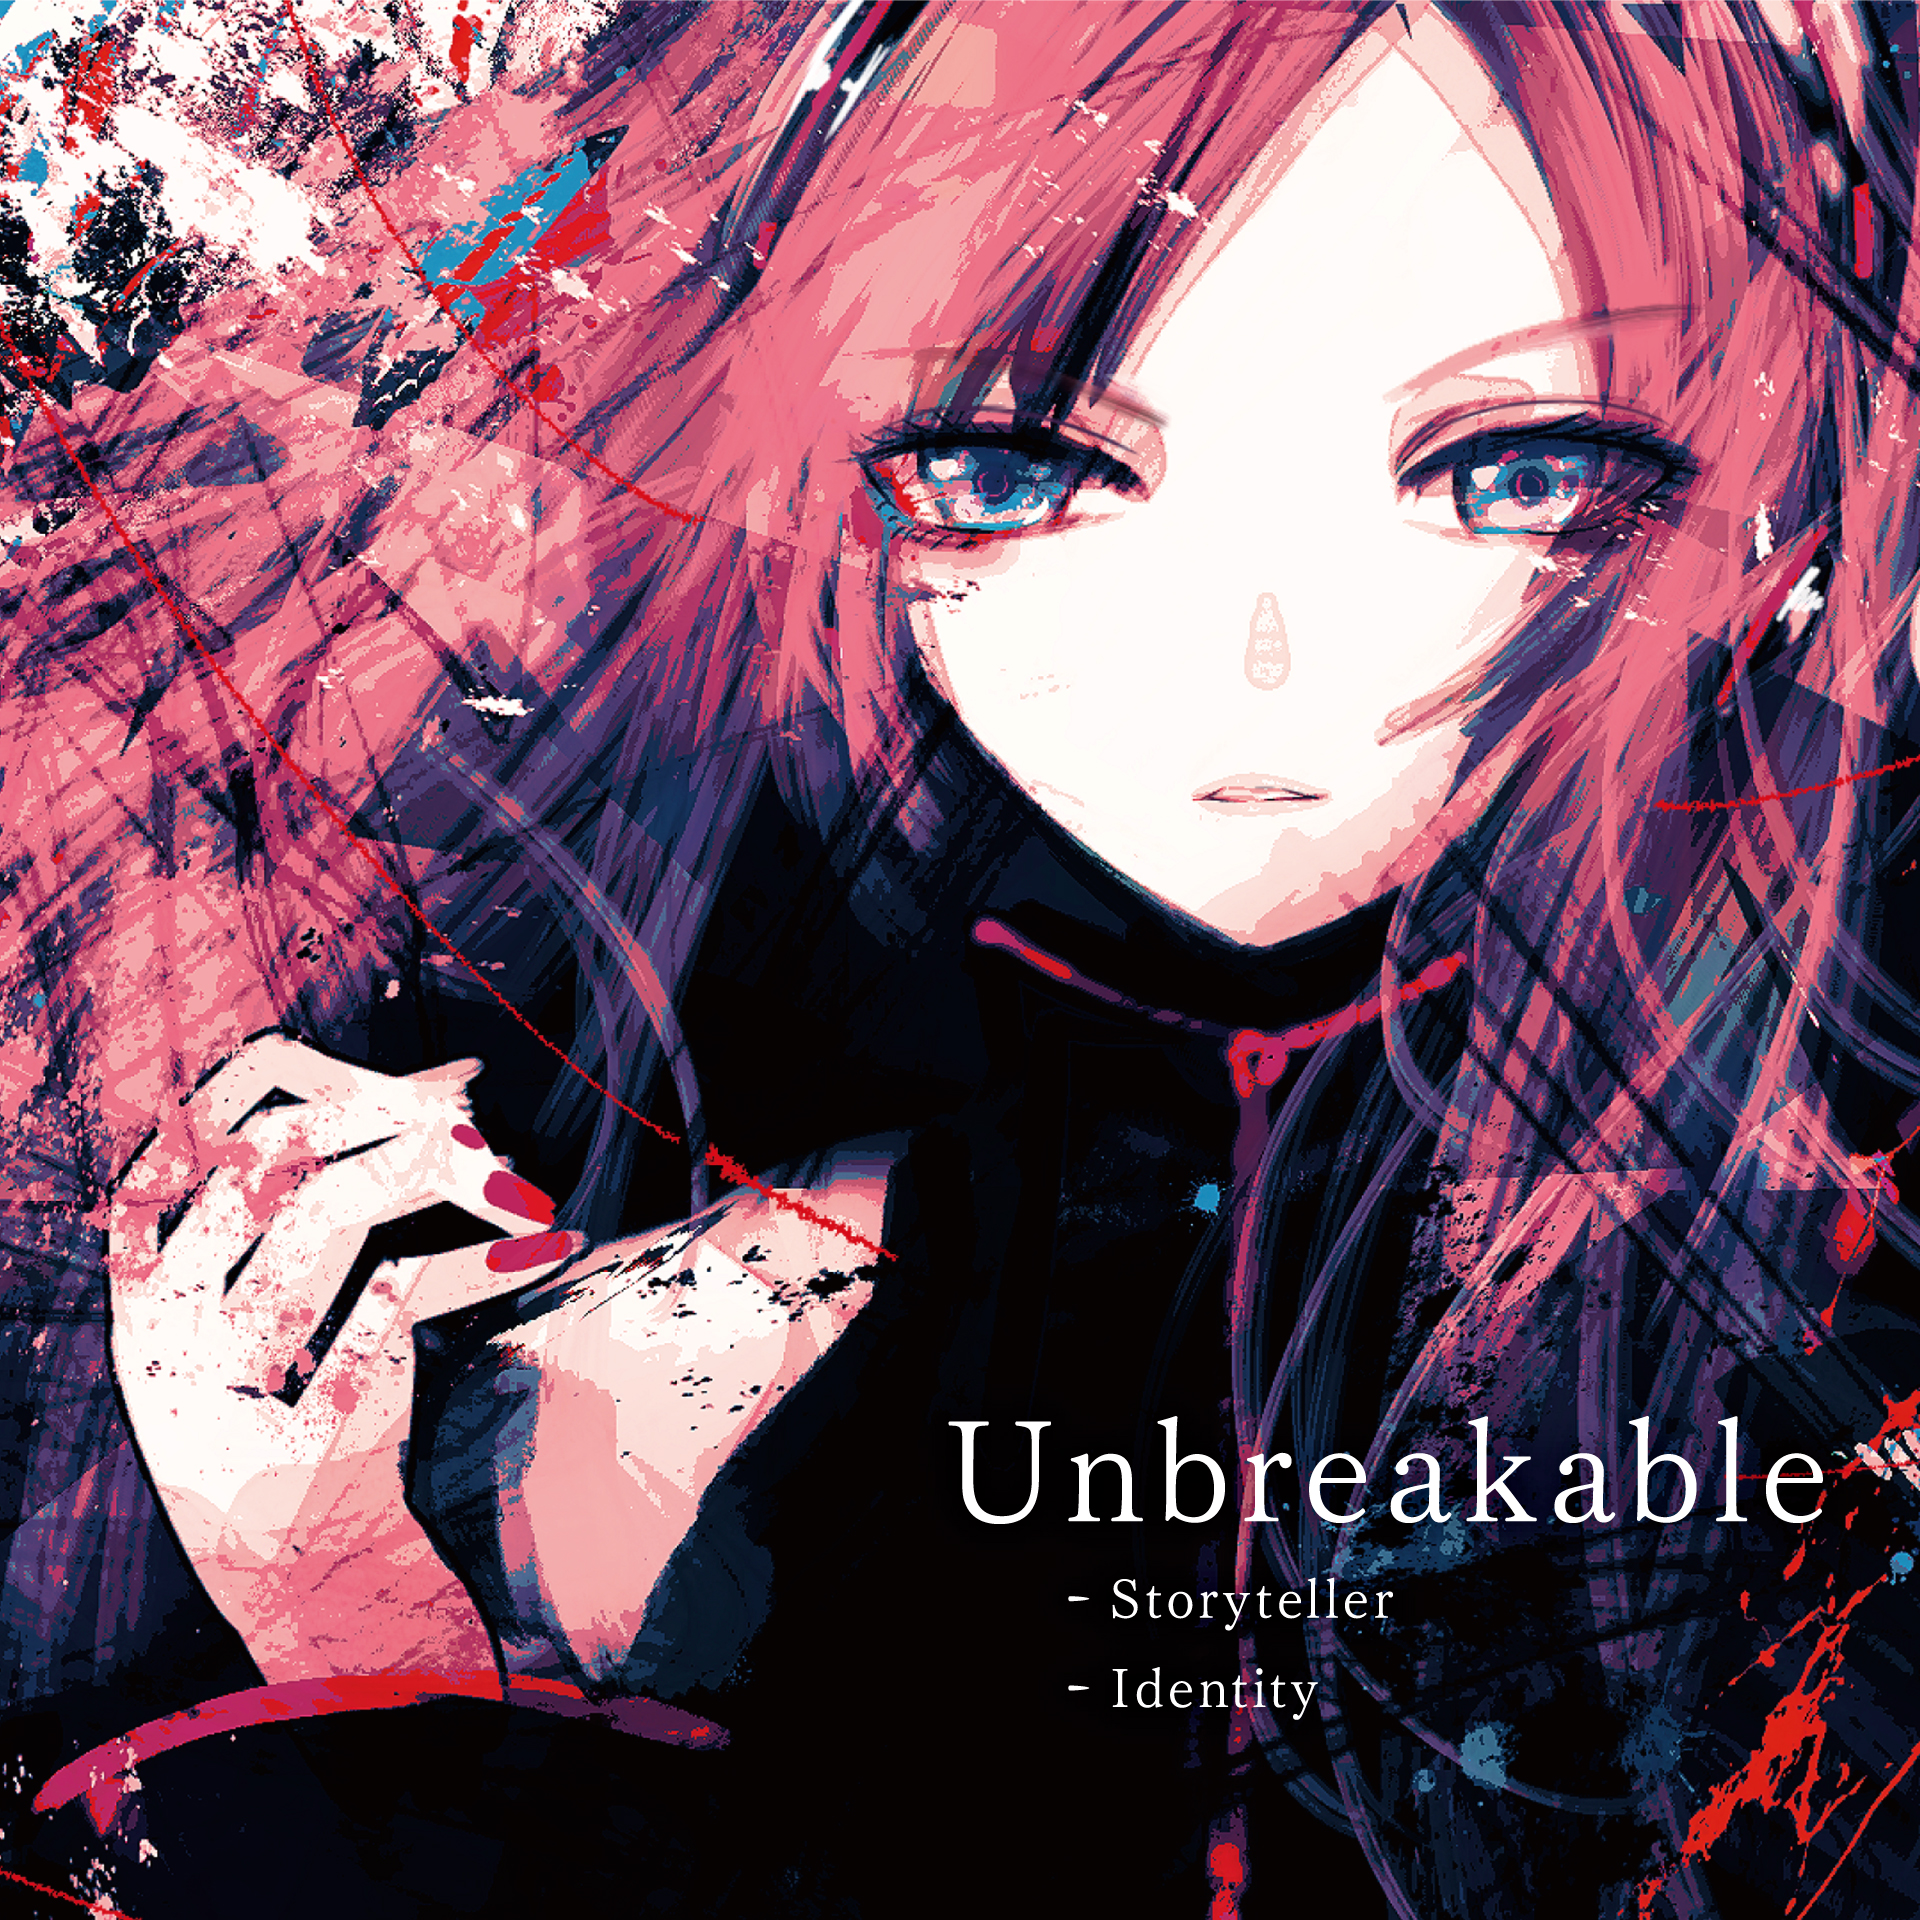 Unbreakable - 書店太郎, B.E.R feat. 巡音ルカ, 巡音ルカ V4X 